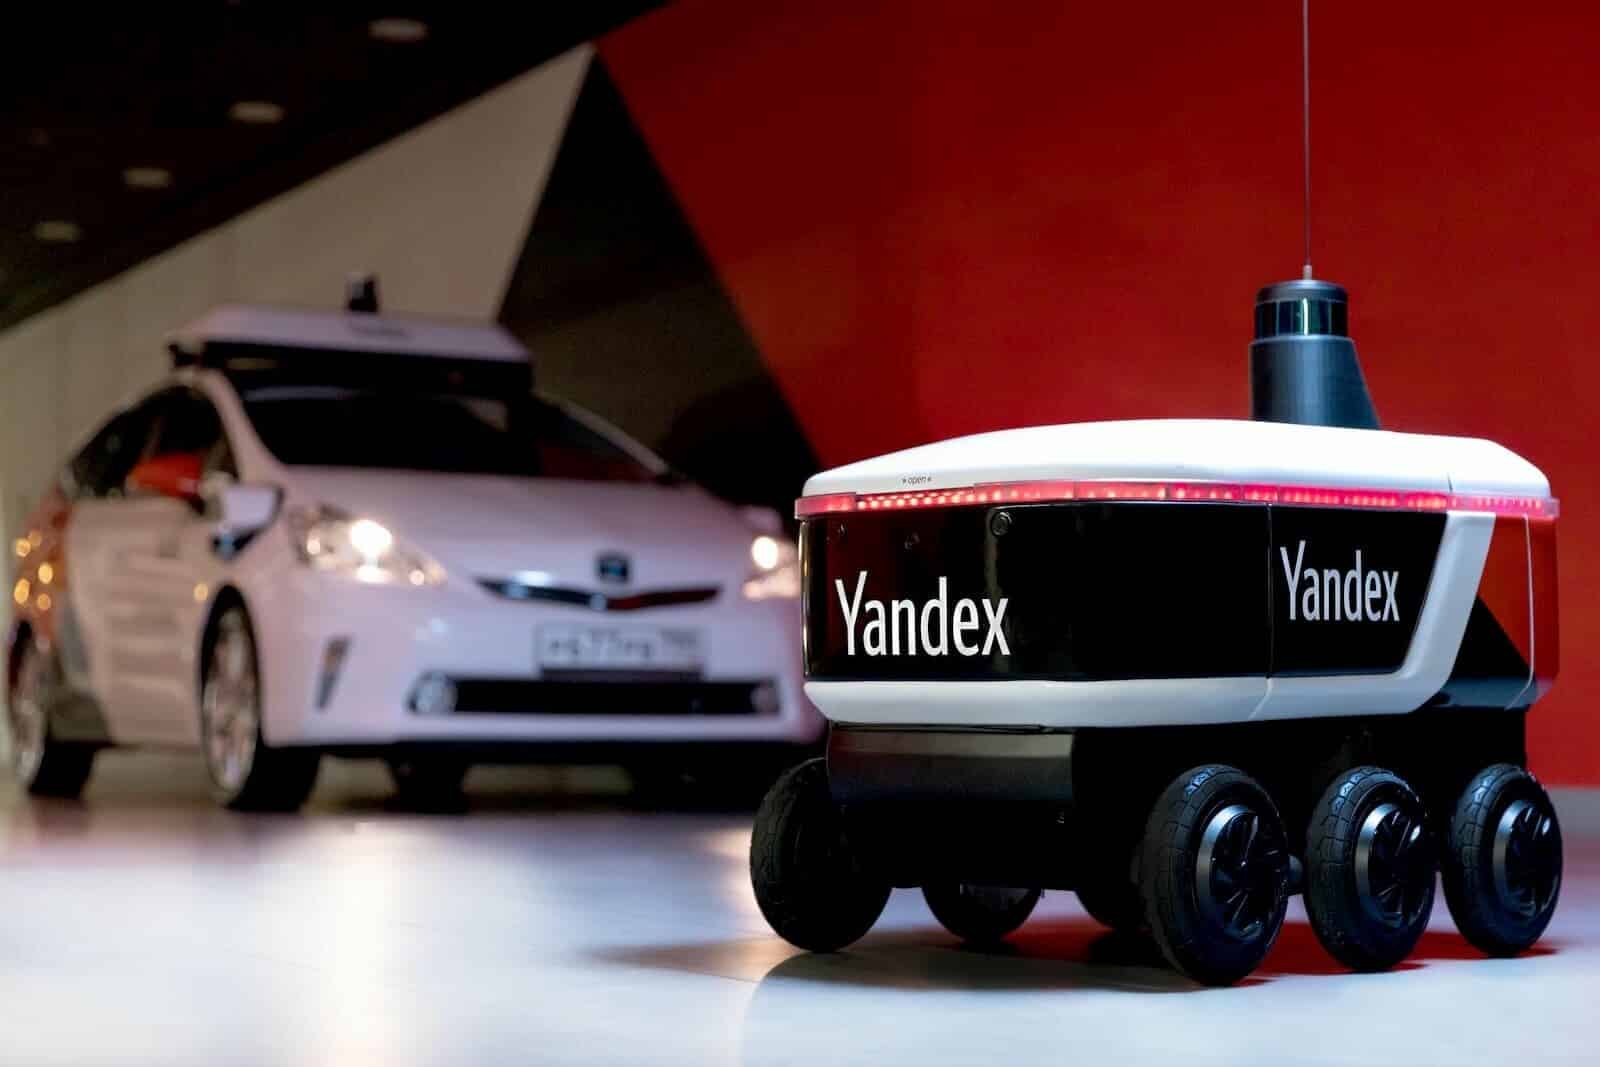 yandex rover